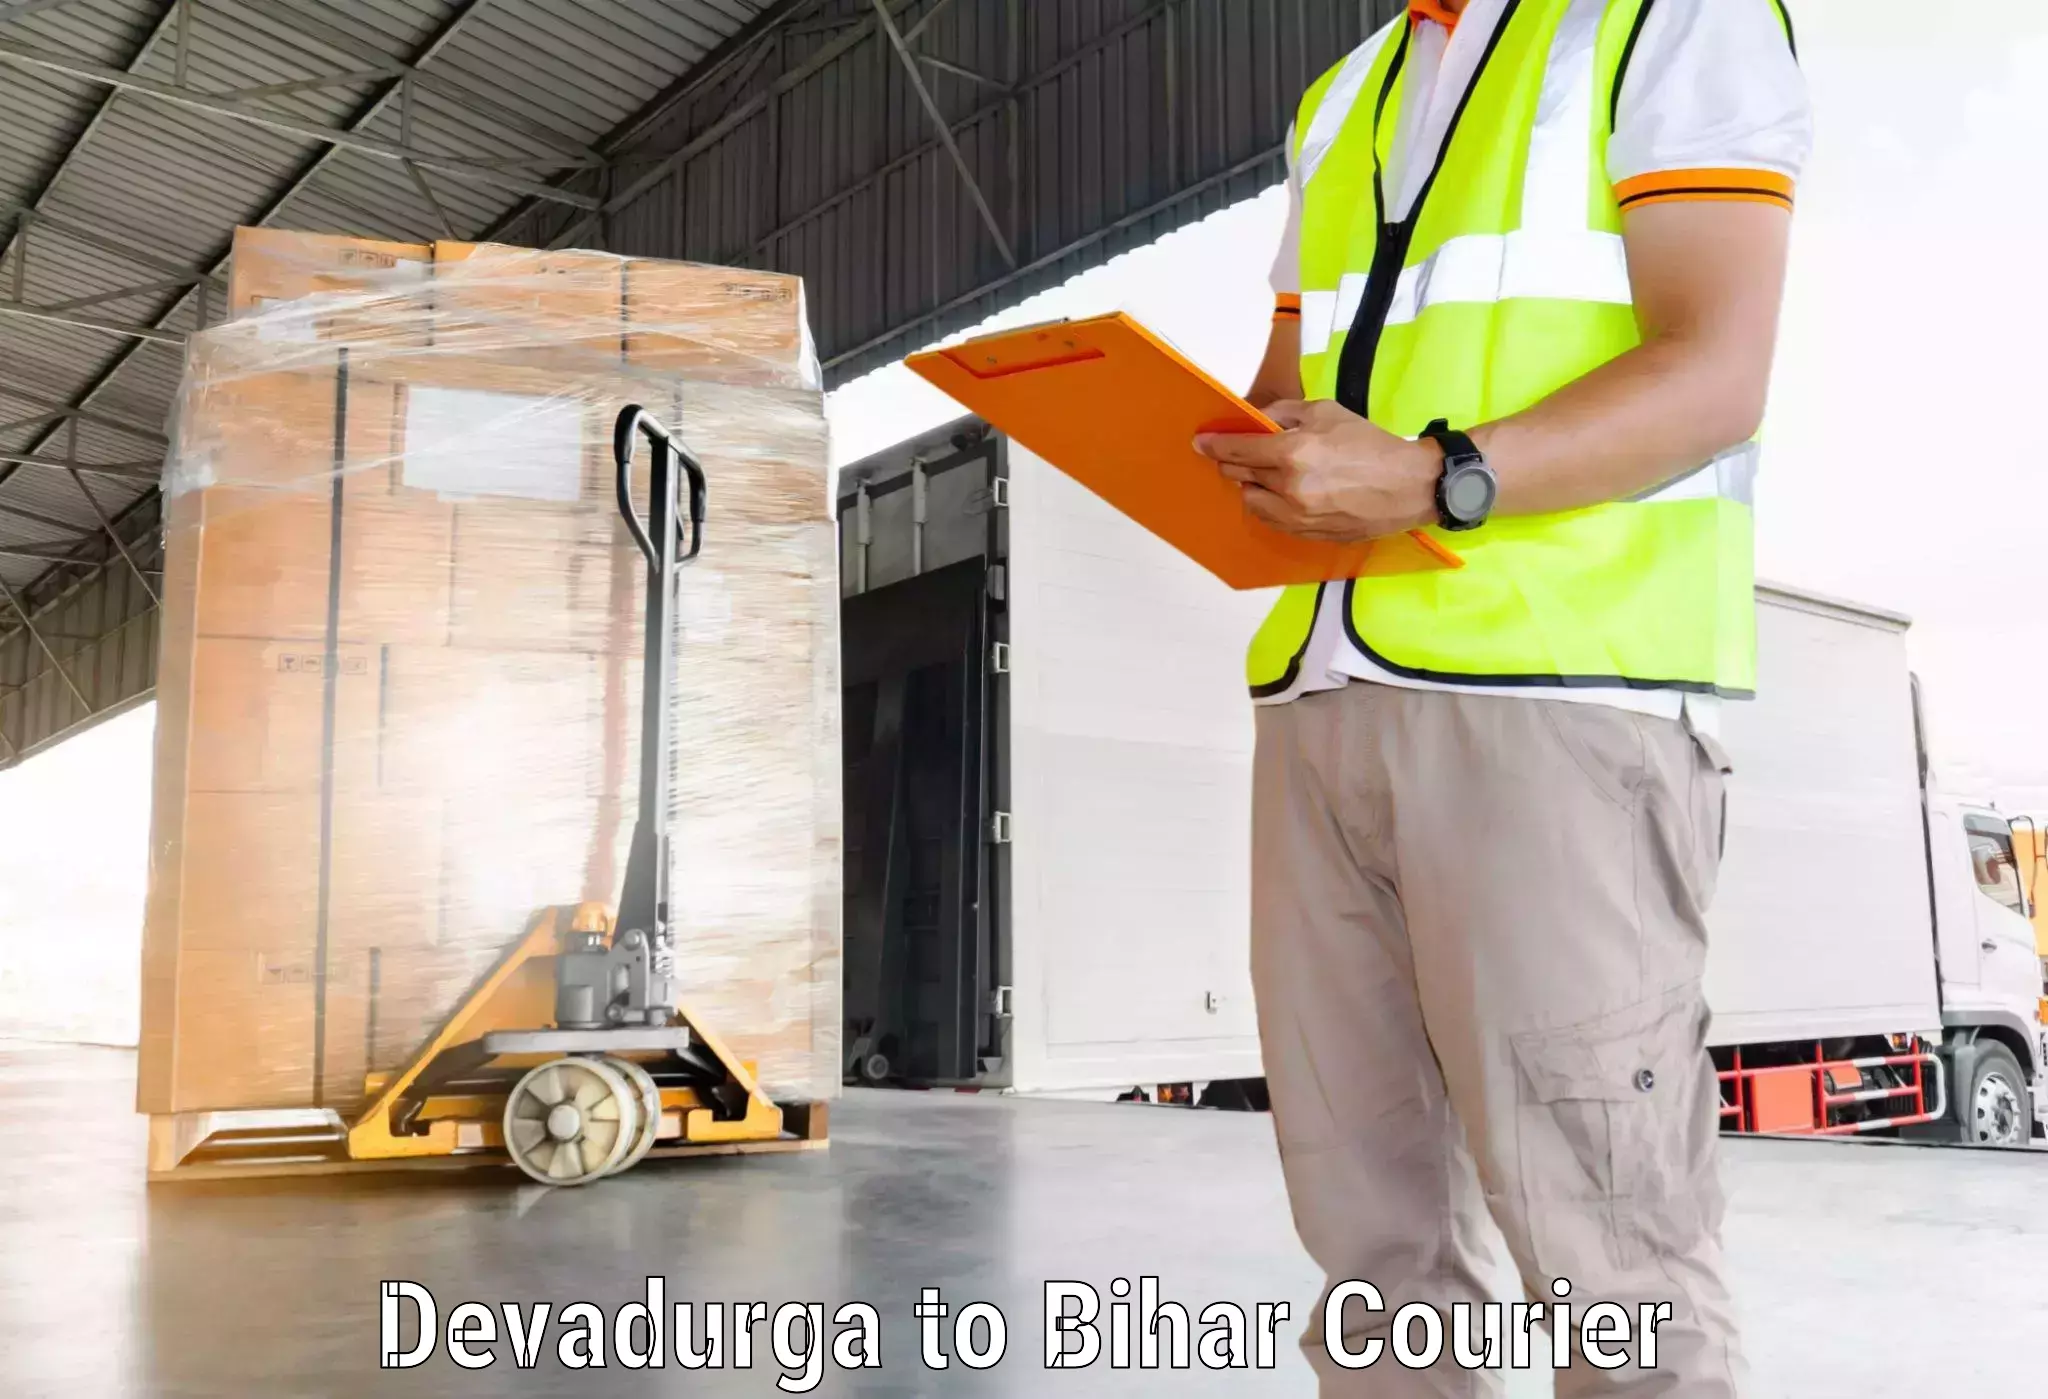 Fast delivery service Devadurga to Dhaka